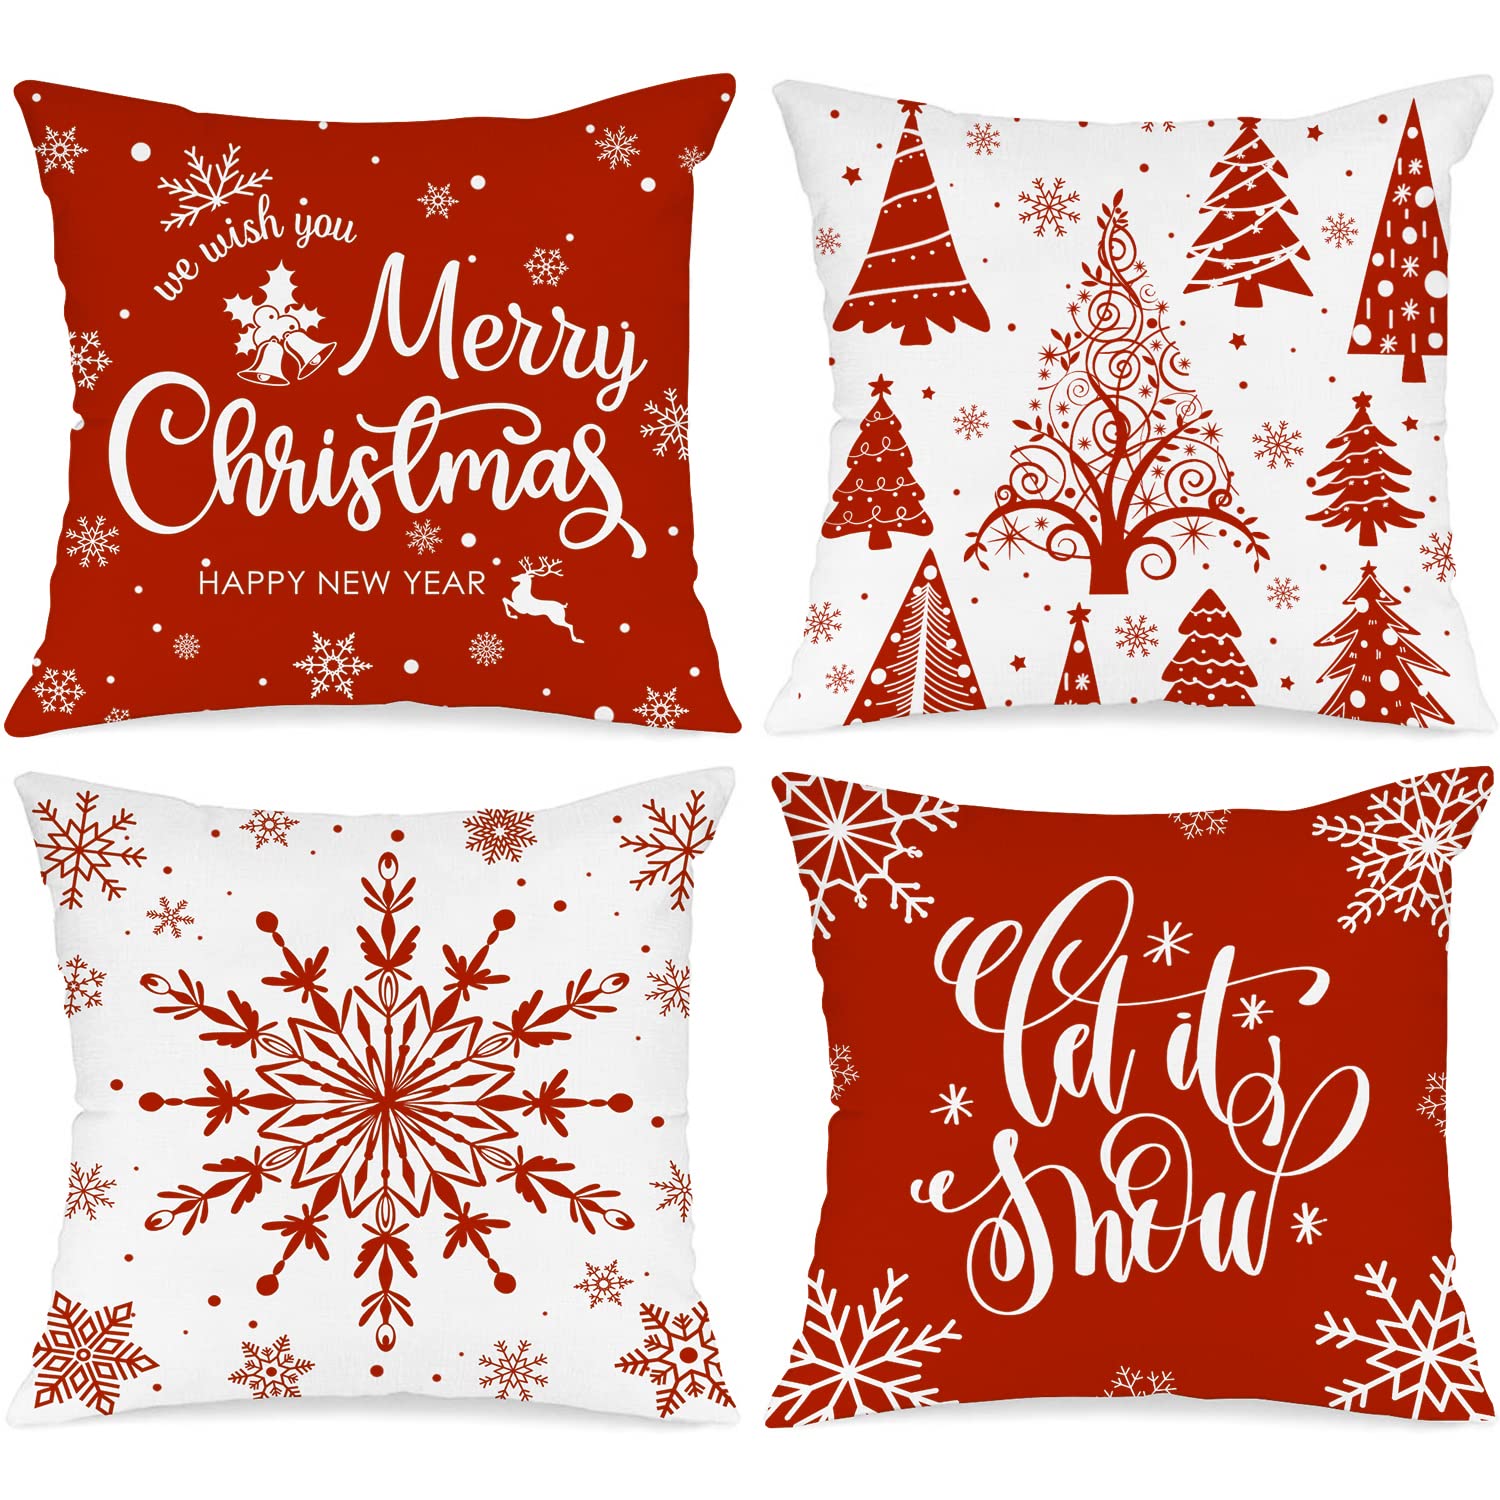 Lanpn Christmas Throw Pillow Covers 18x18 Set of 4, Merry Christmas Winter Xmas Snowflake Decorative Holiday Cushion Pillow Case